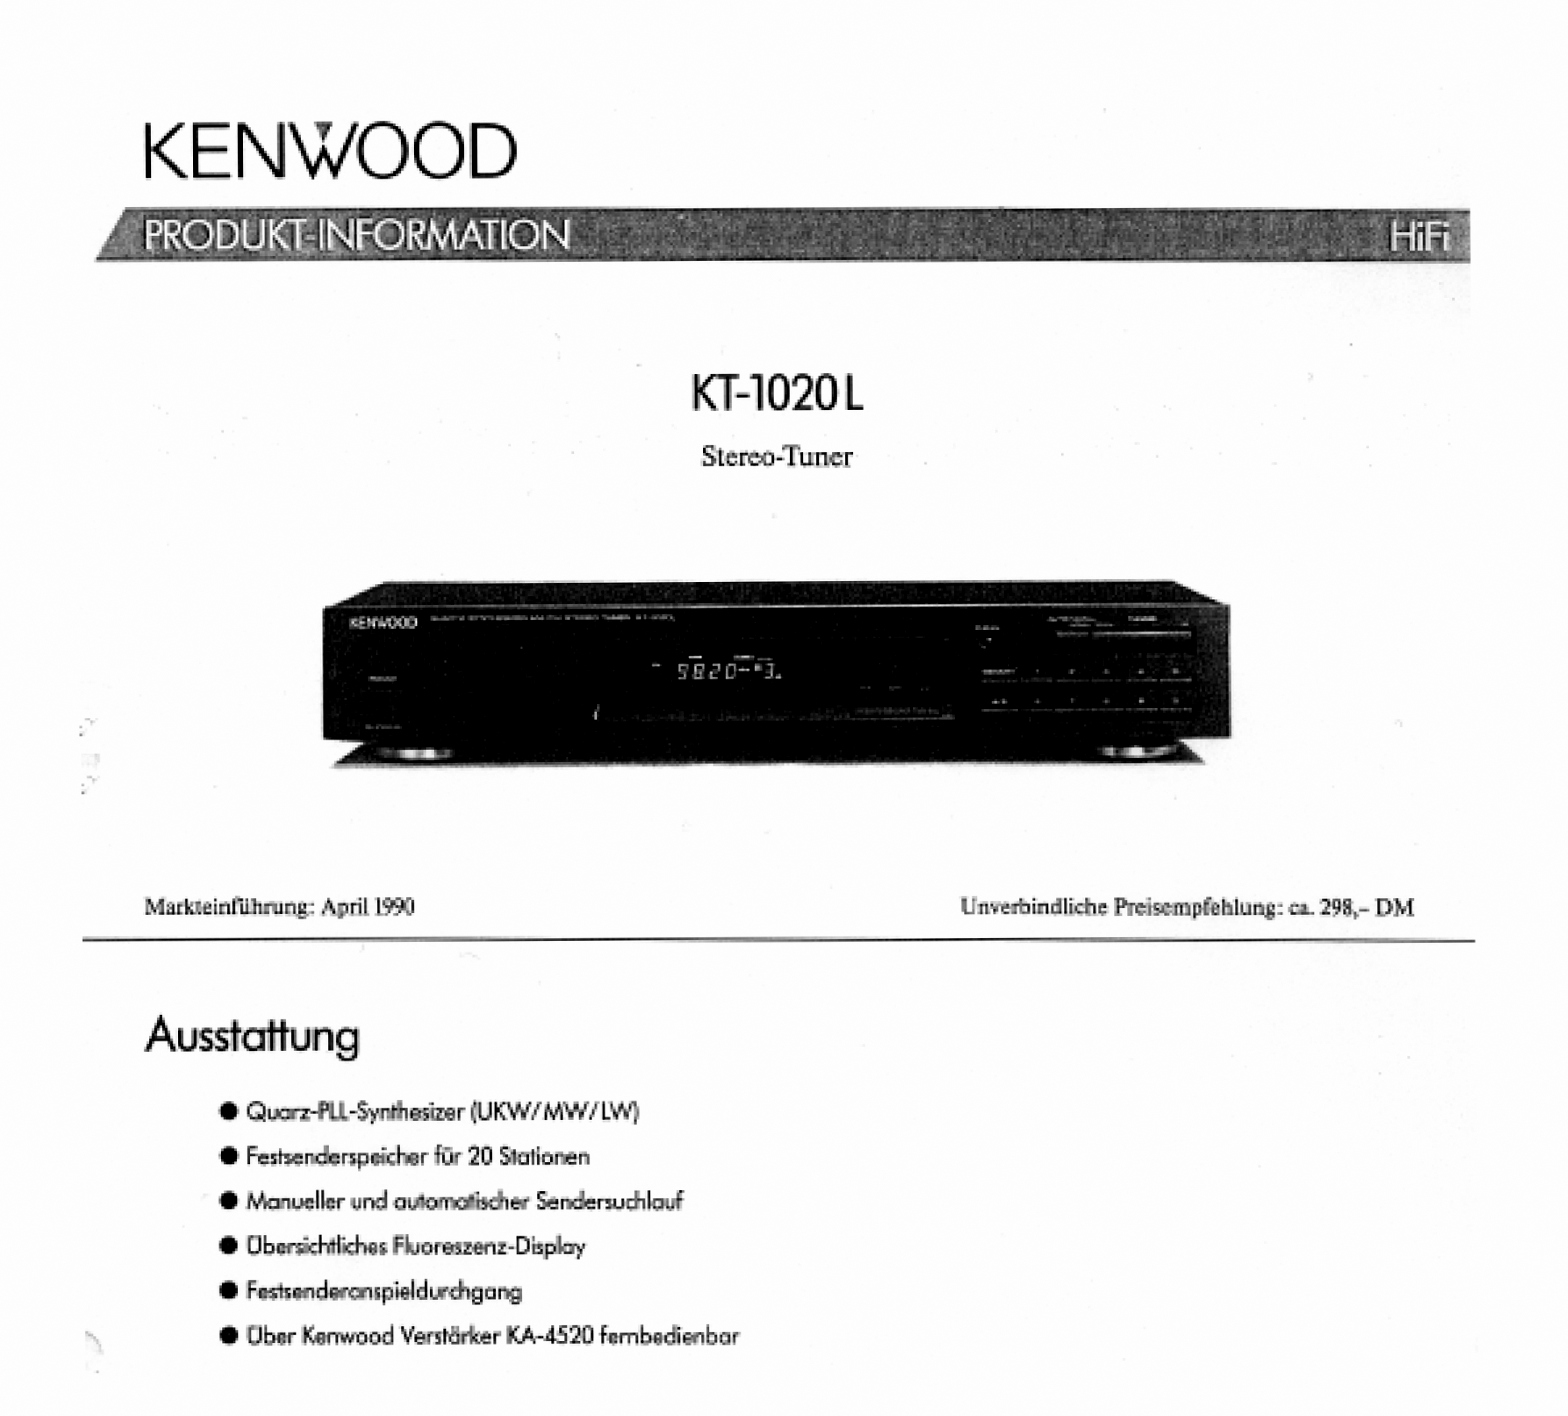 Kenwood KT-1020 L-Prospekt-1990.jpg